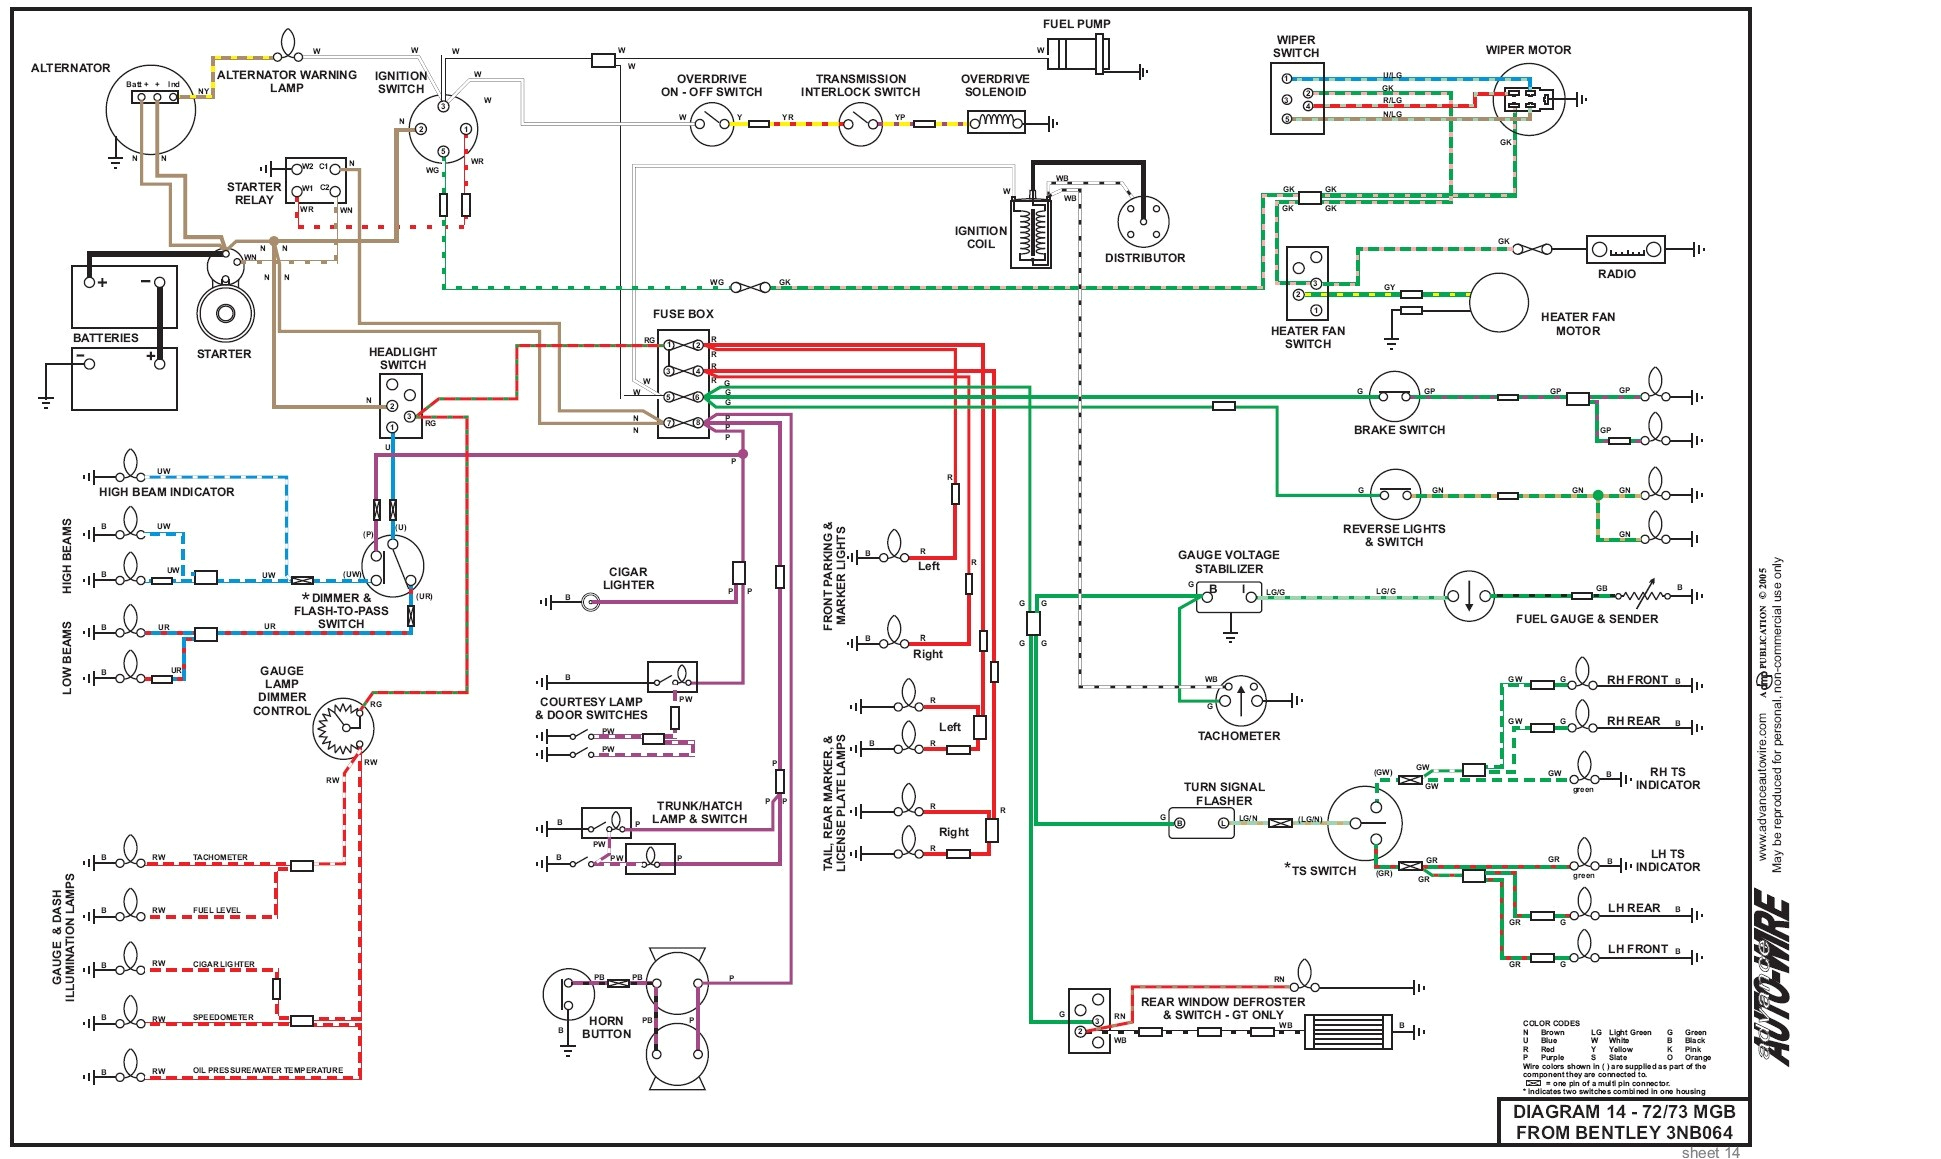 1973 mg mgb wiring diagram schematic wiring diagrams 1973 mg mgb wiring diagram